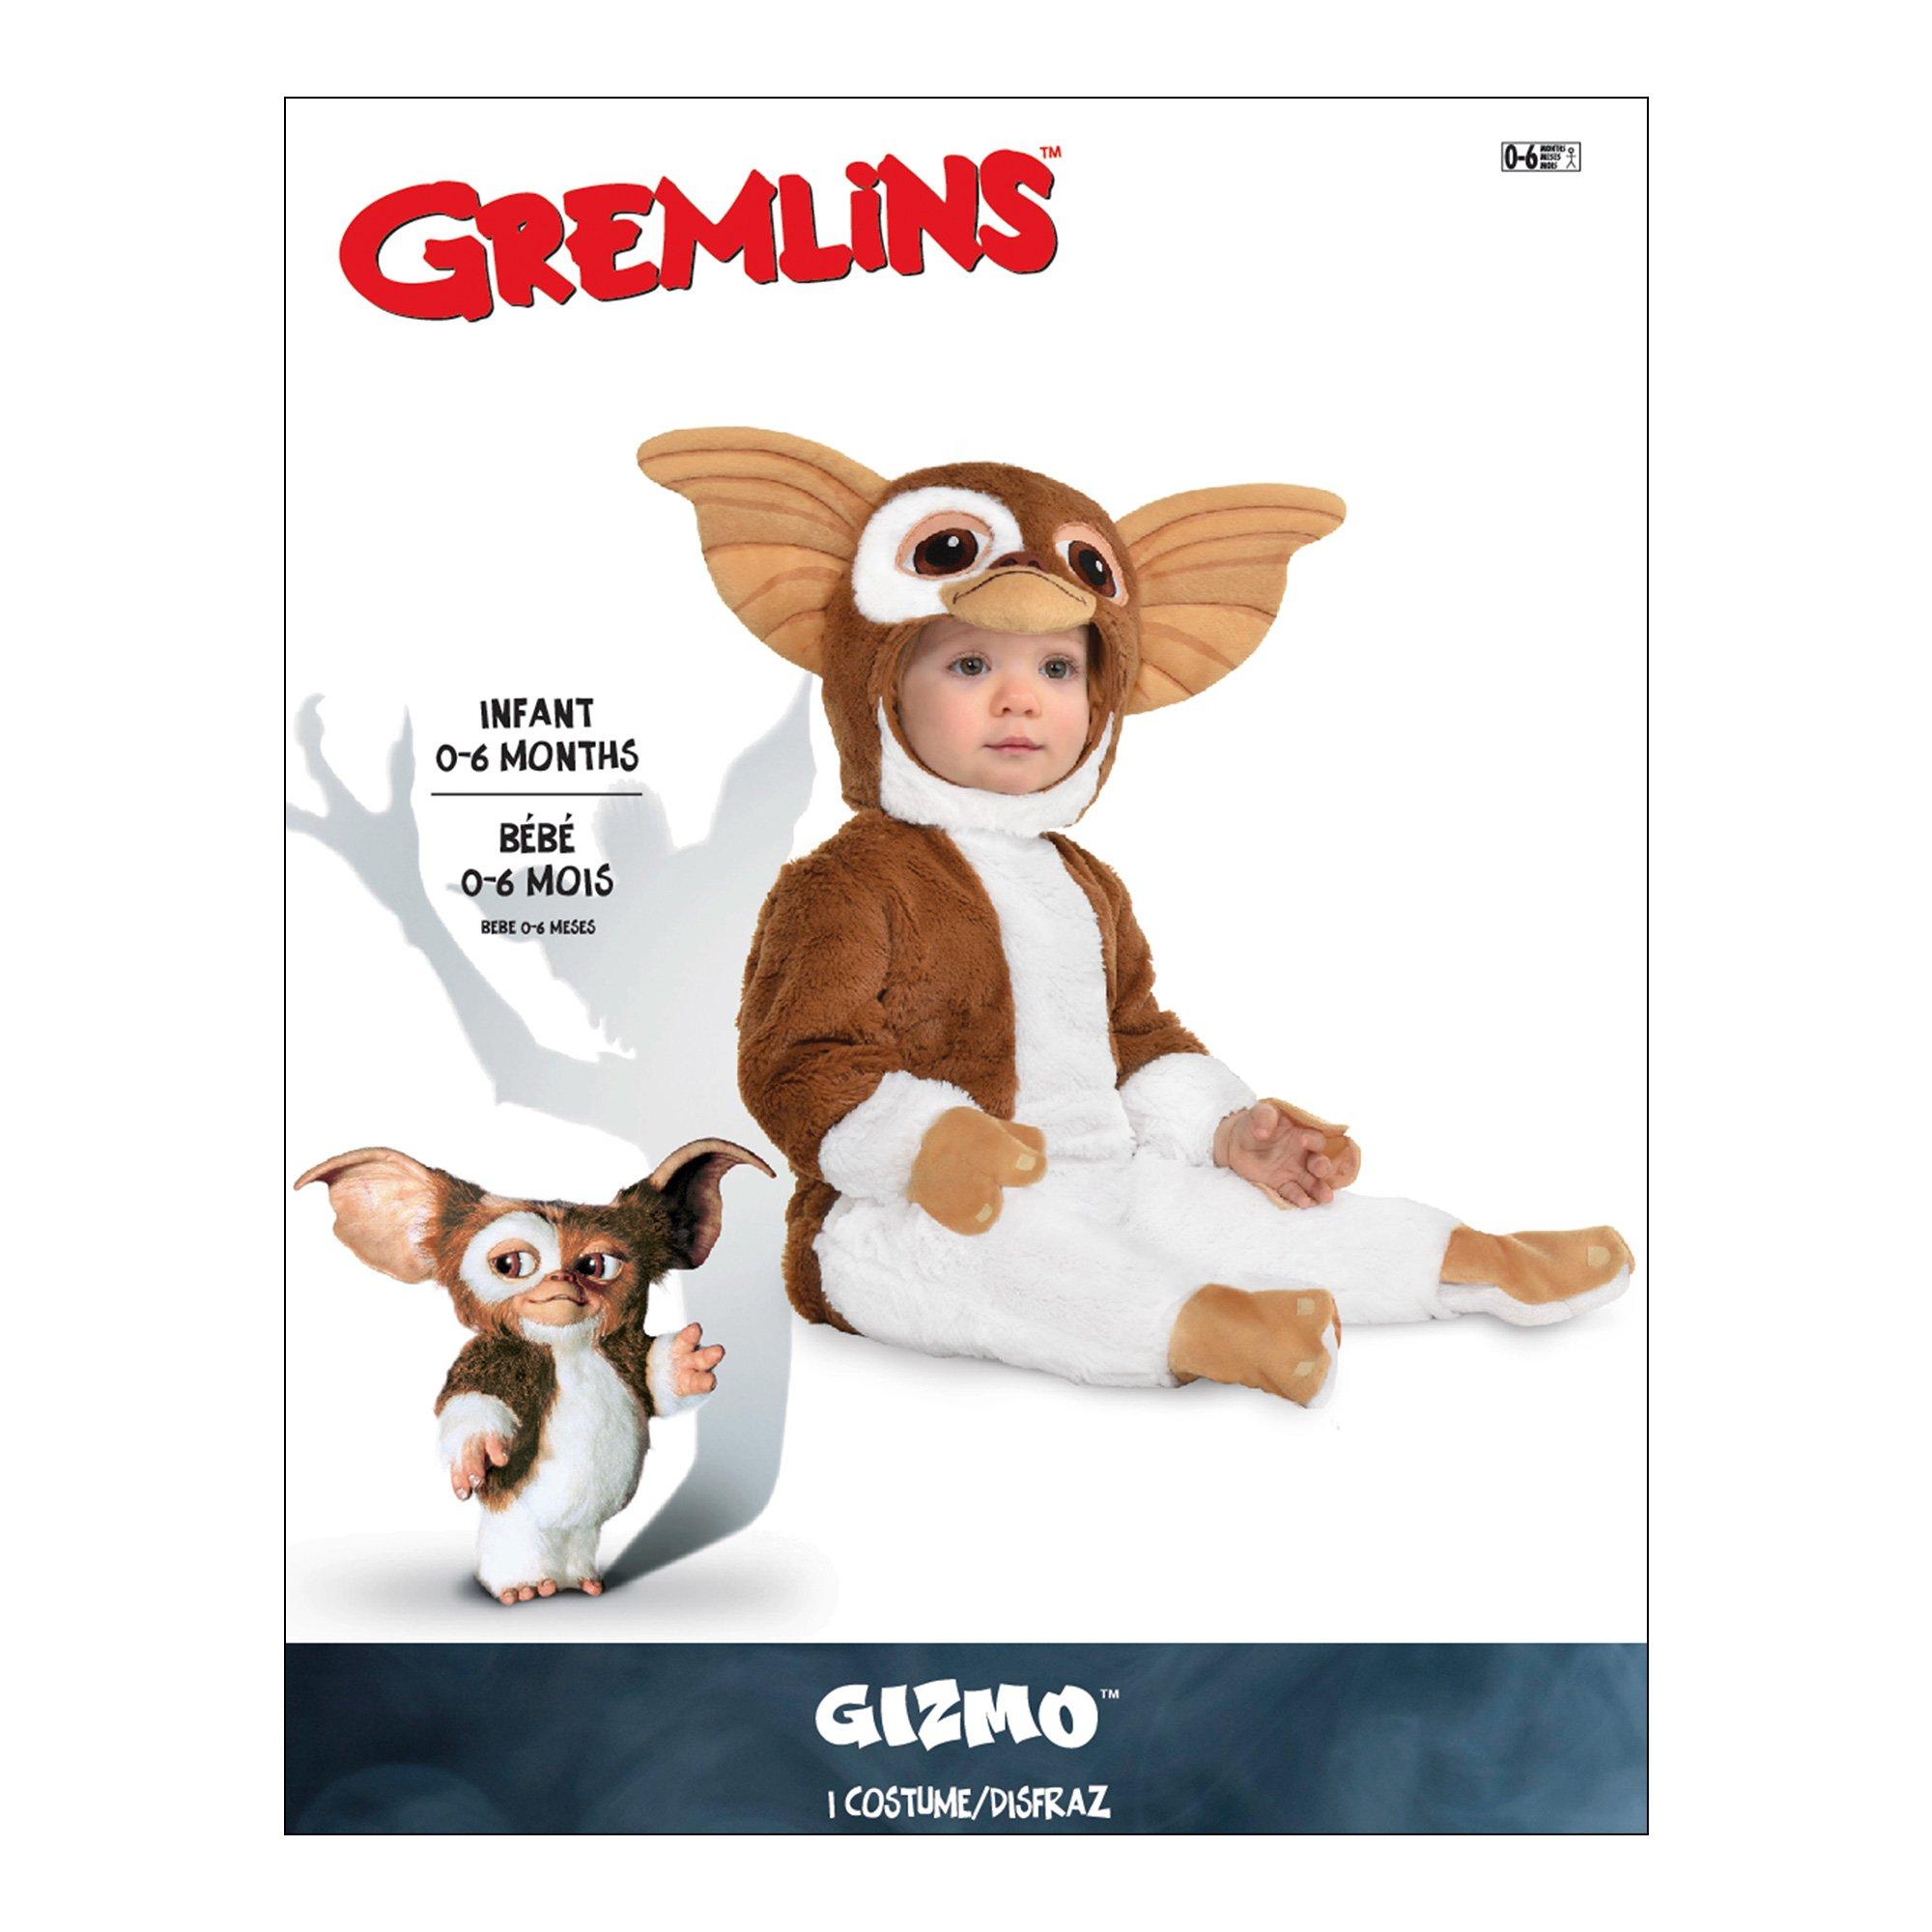 Baby Gizmo Costume - Gremlins Movie